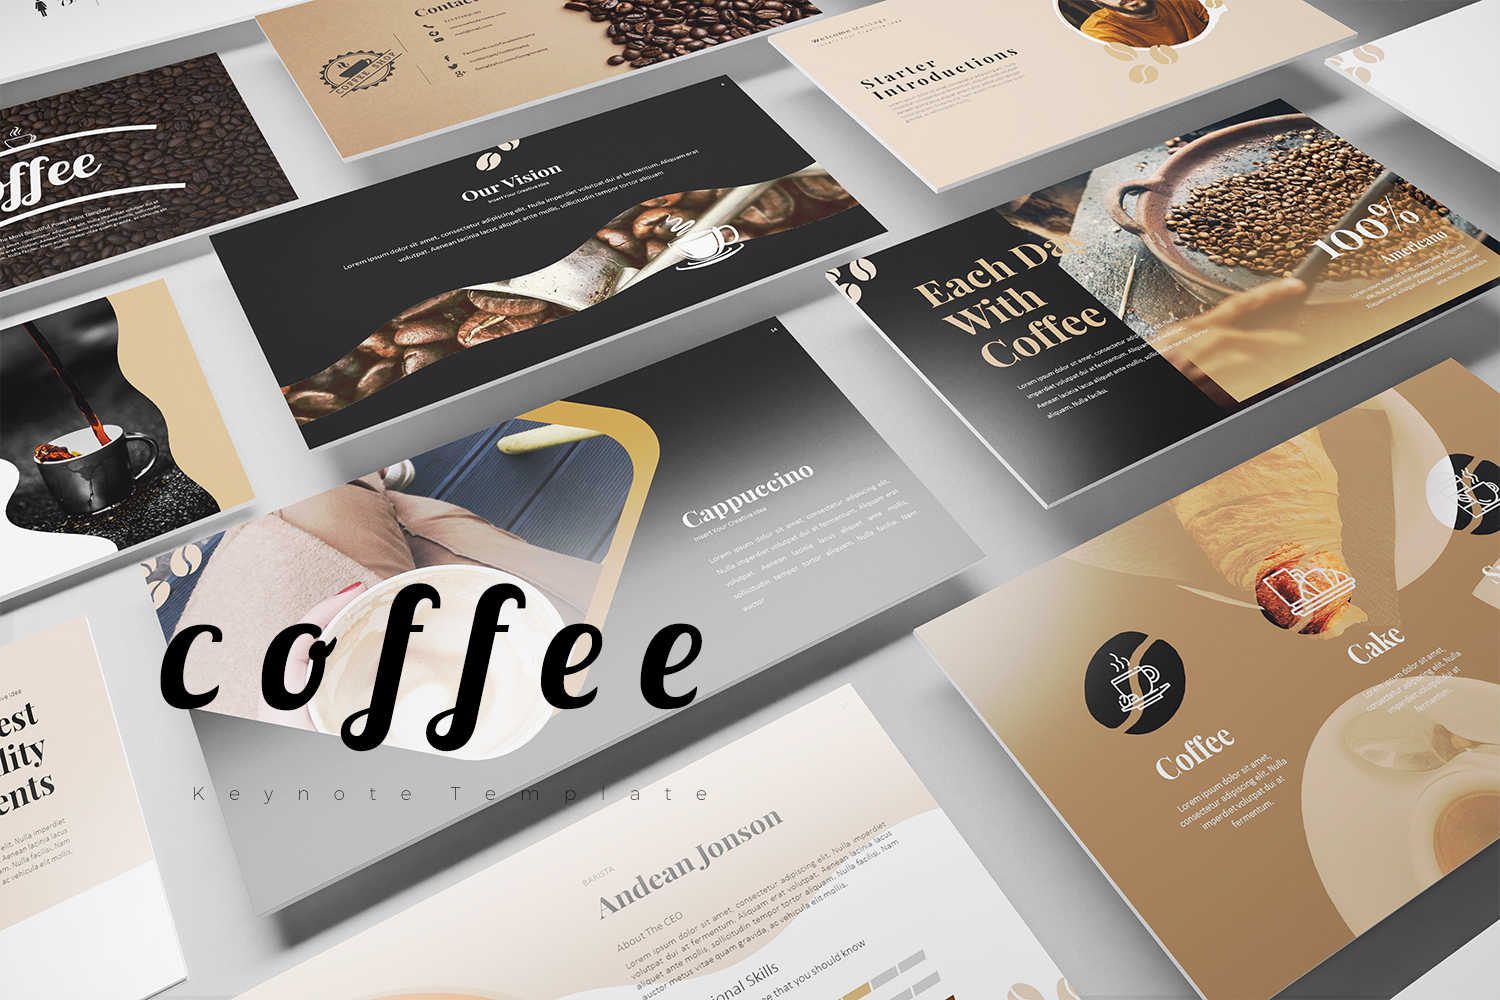 Coffee - Keynote template